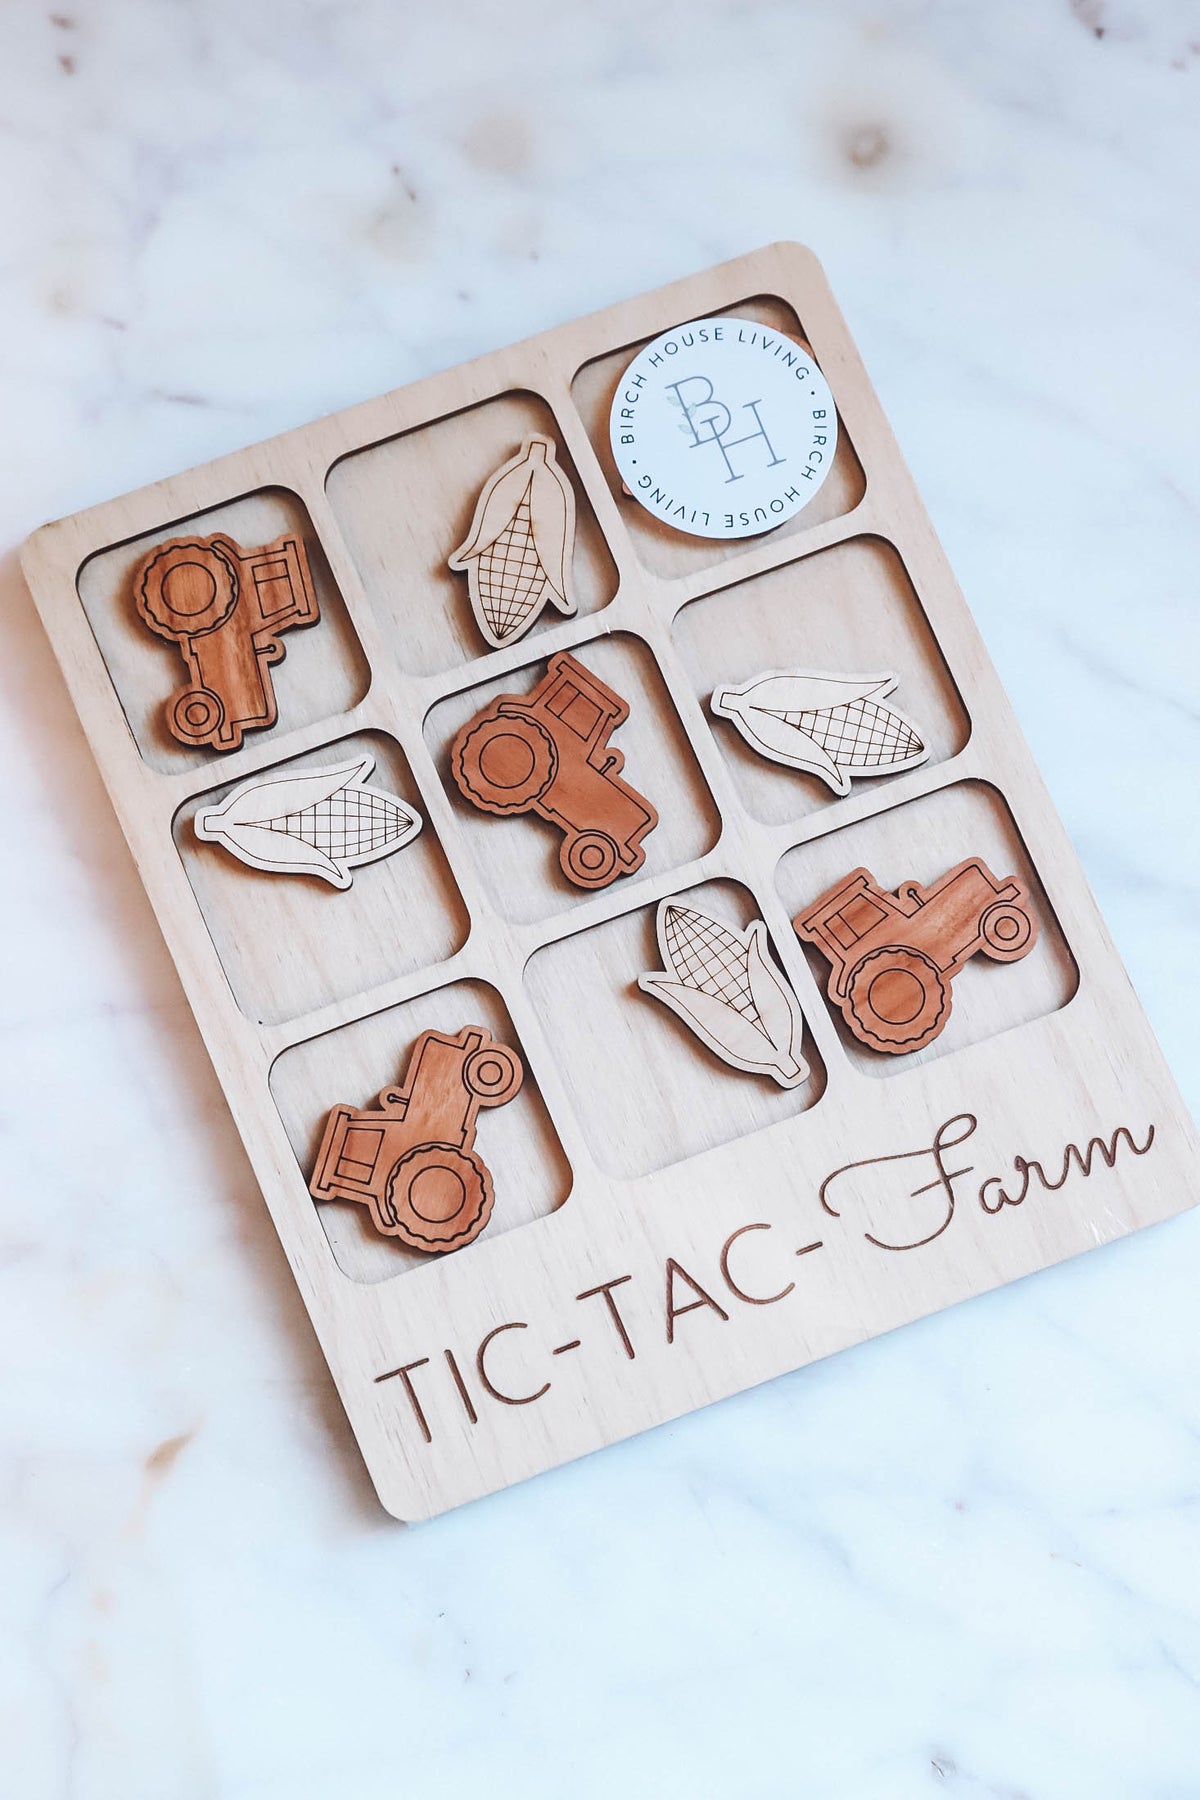 Tic-Tac-Toe Farm Game-3 Options